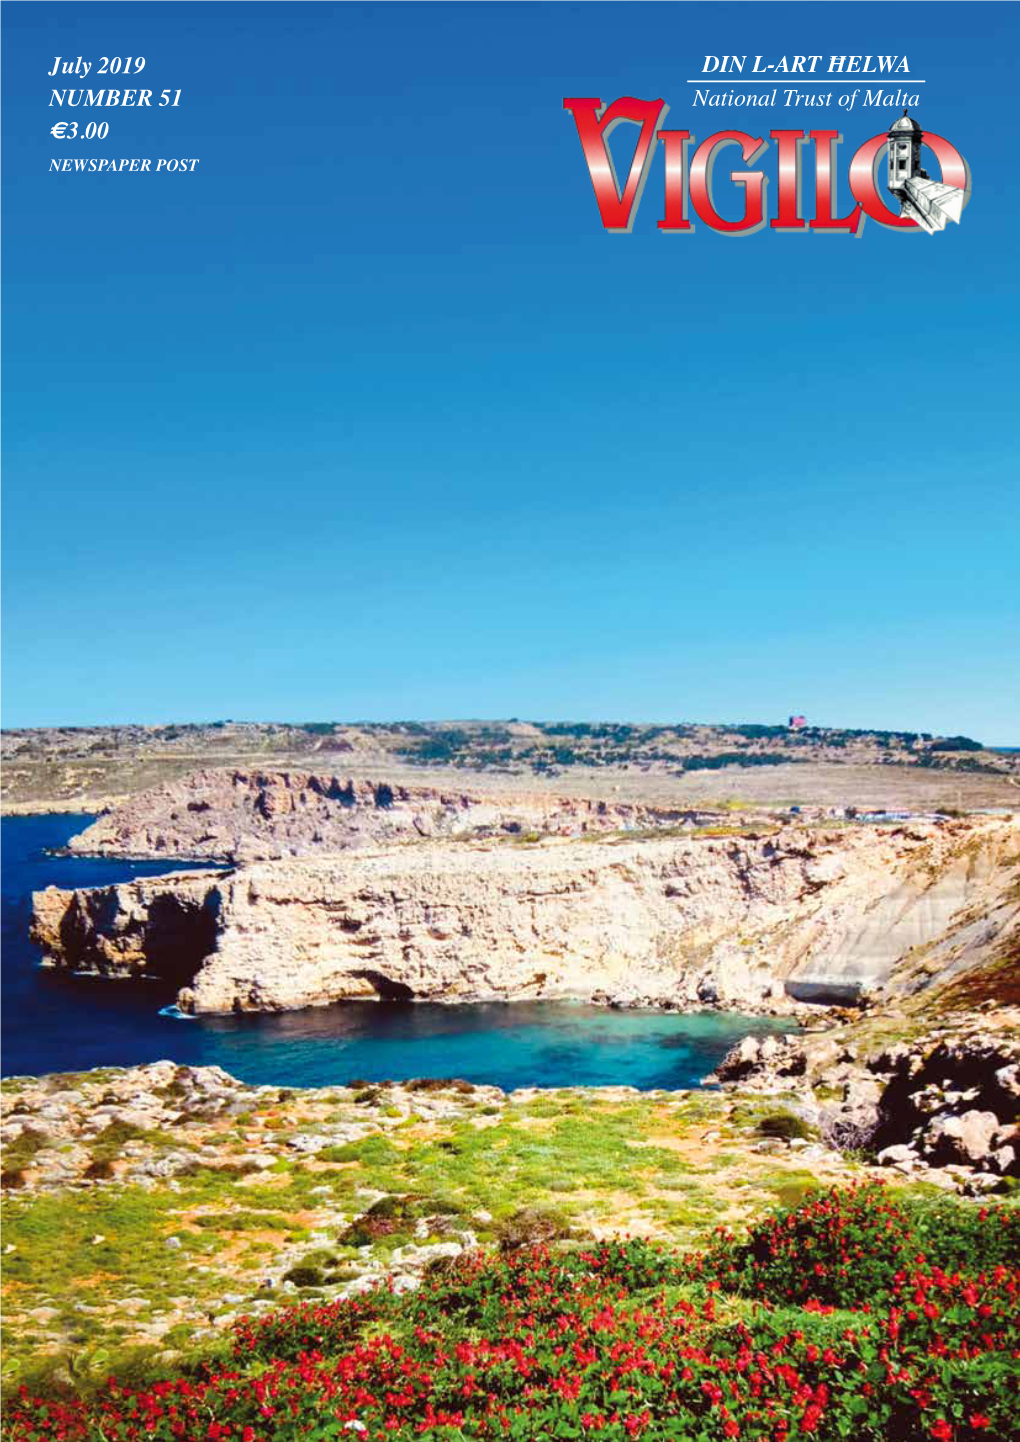 July 2019 NUMBER 51 €3.00 DIN L-ART ĦELWA National Trust of Malta